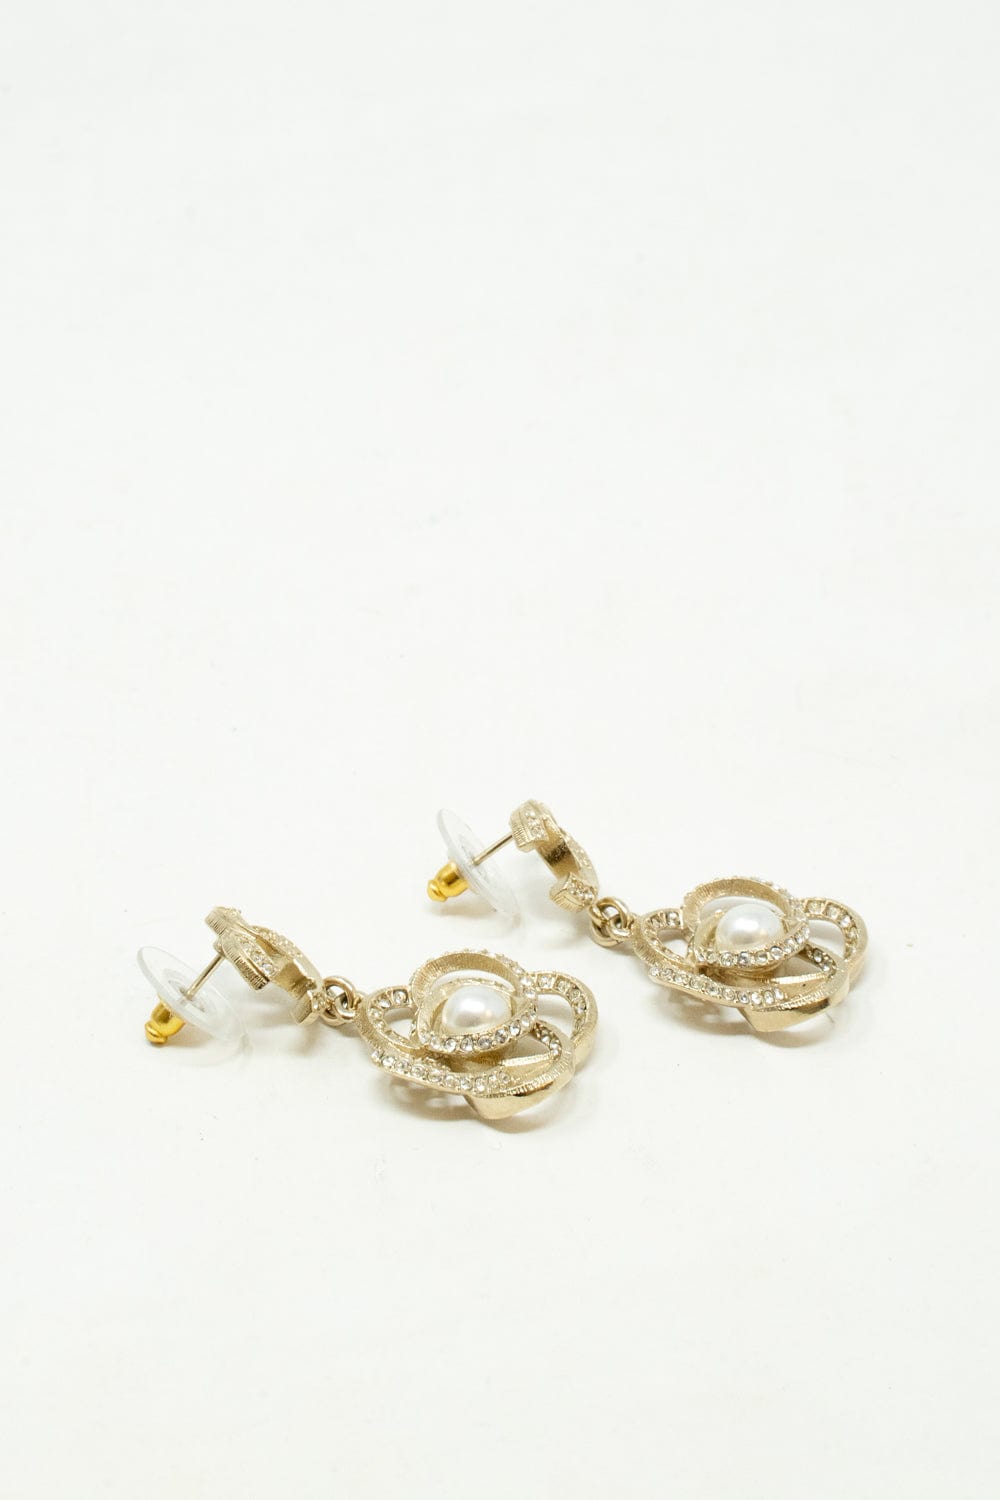 Chanel Chanel Pearl Camellia Earrings - ALL0004